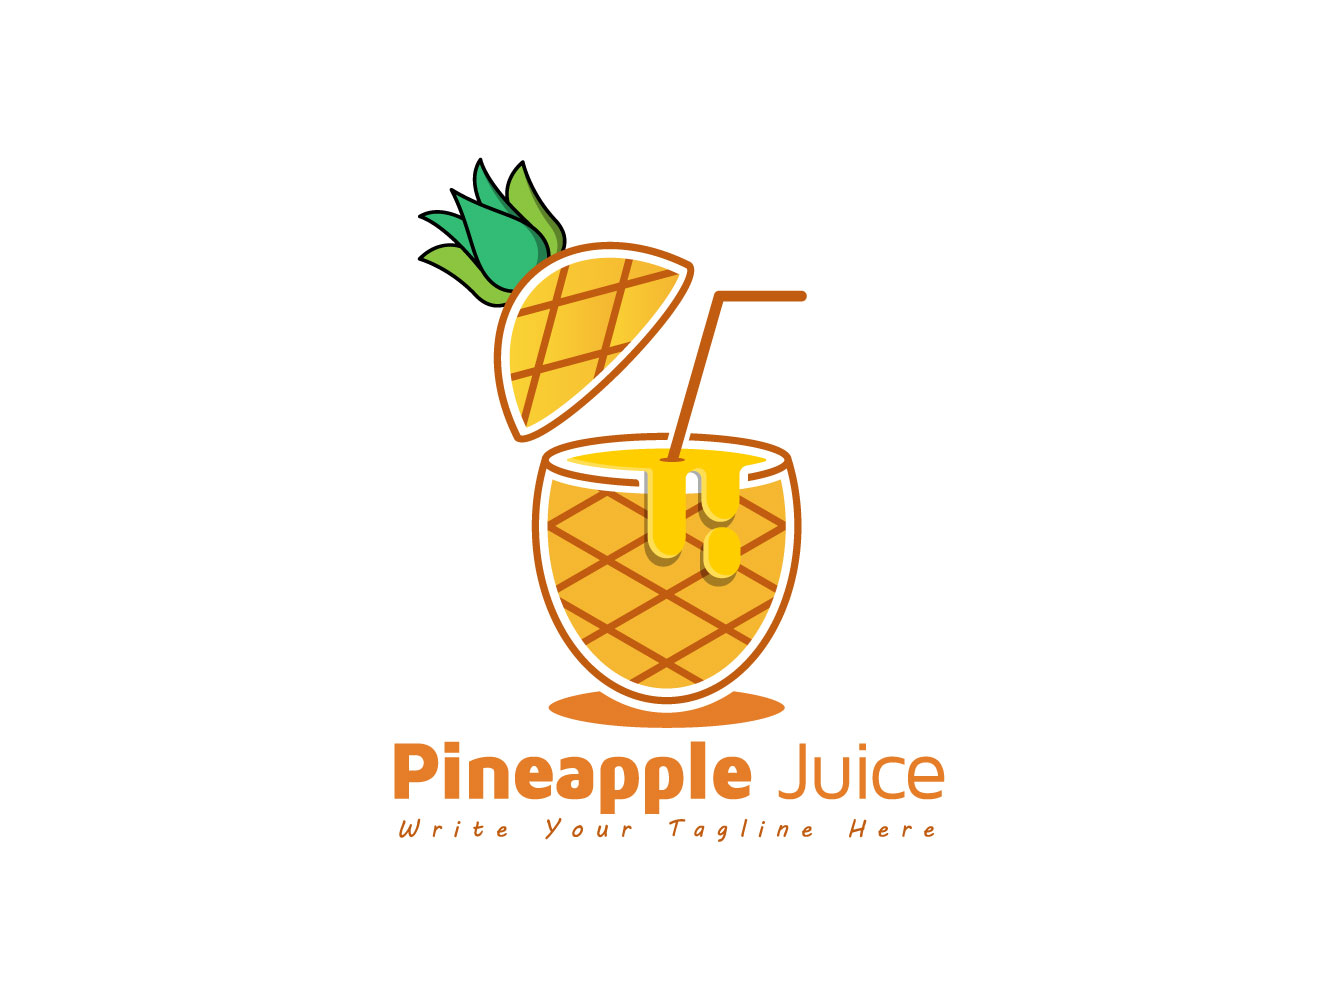 Fresh juice logo icon vector design, pineapple juice logo, drinking juice concept